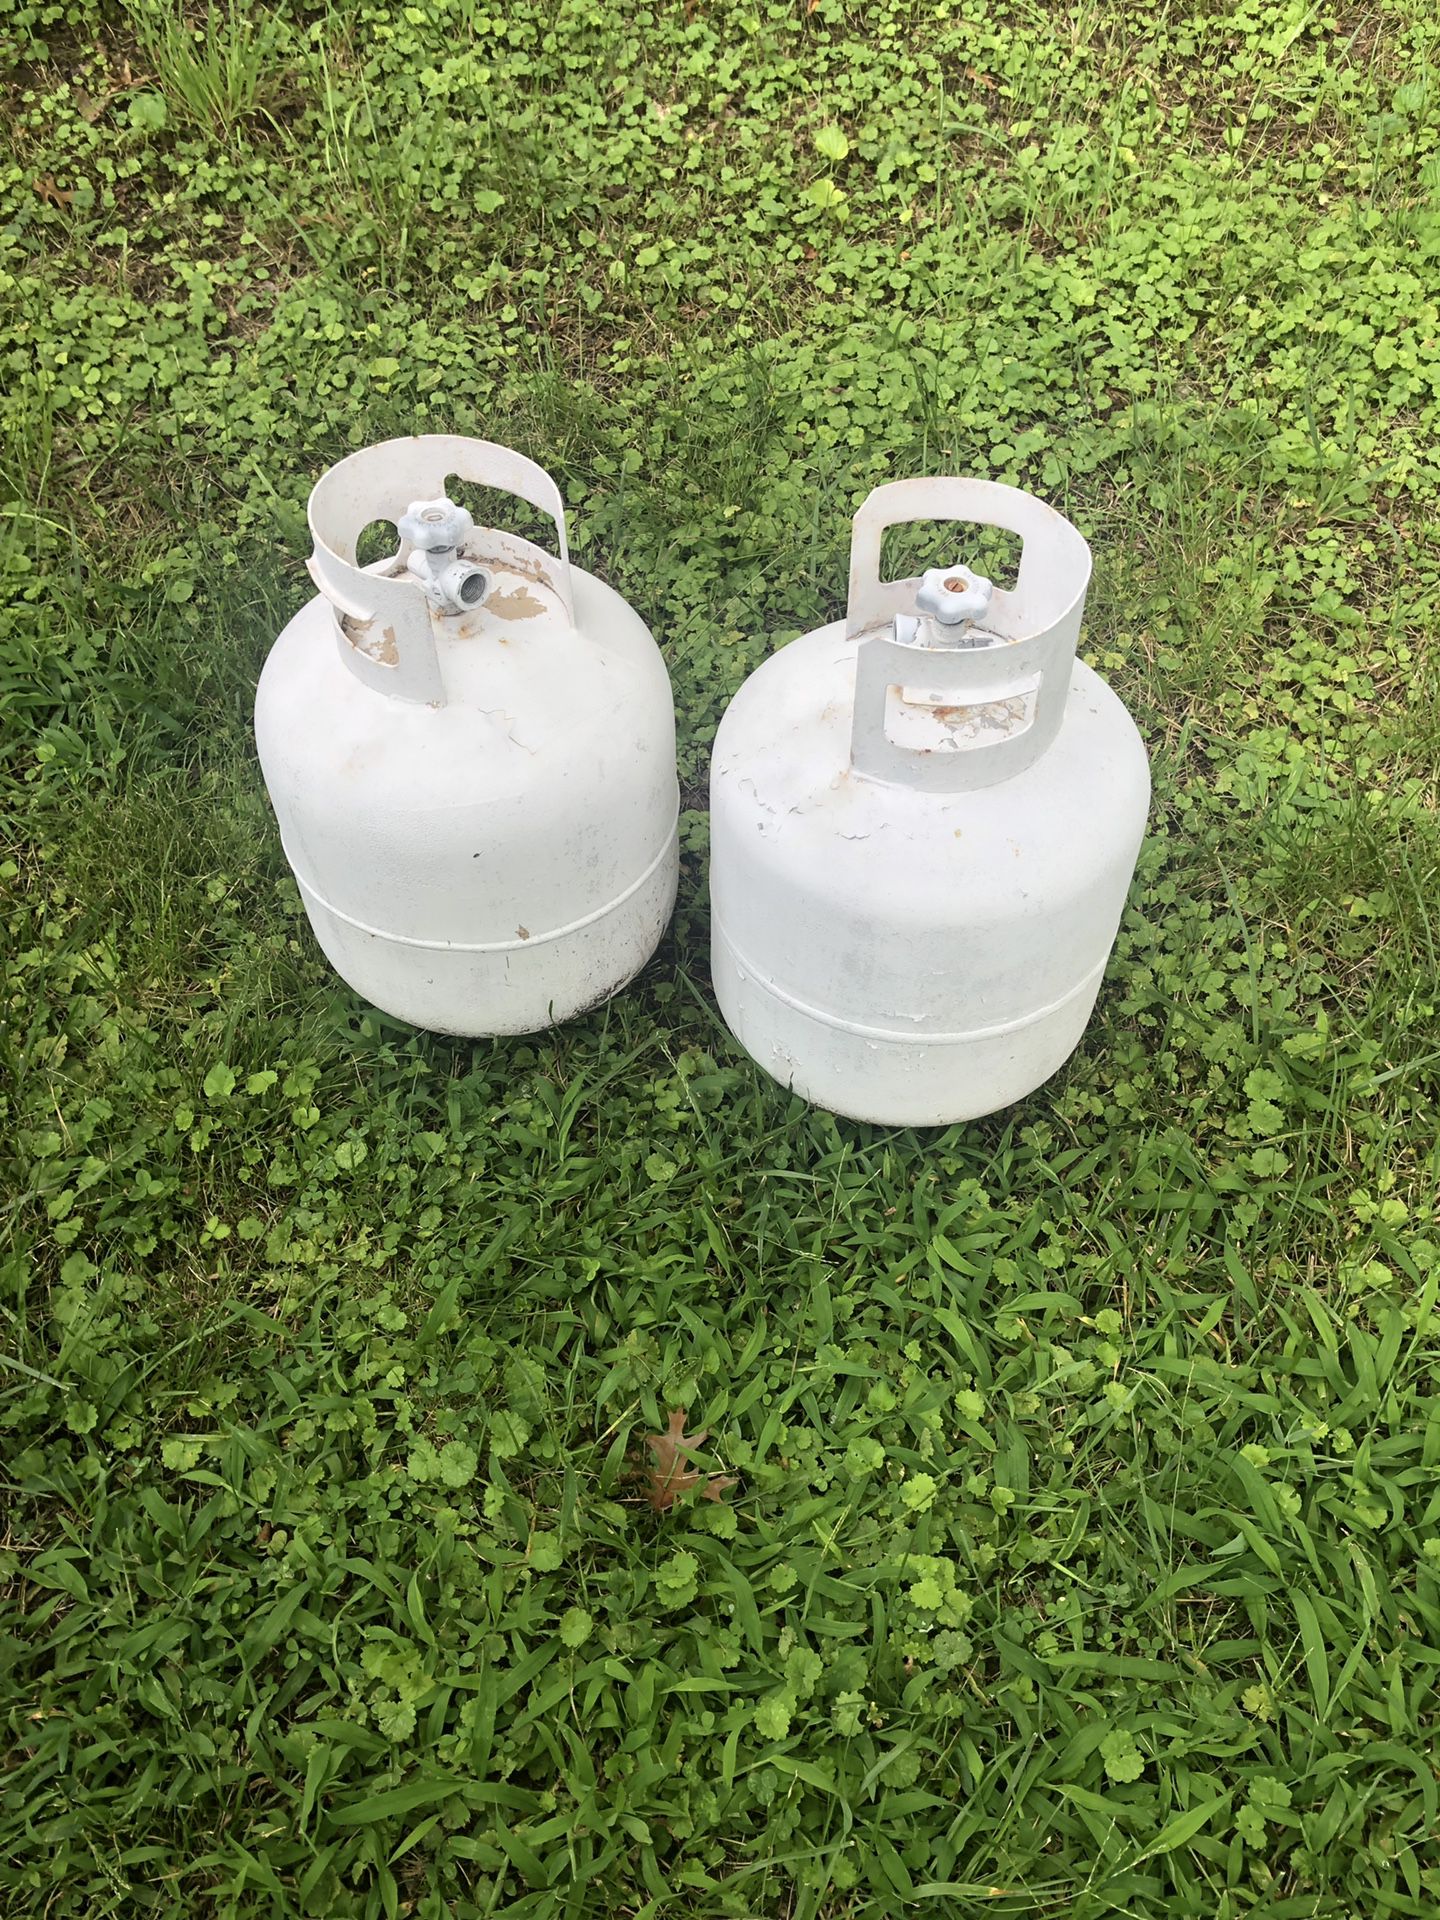 Two Propane Cylinders